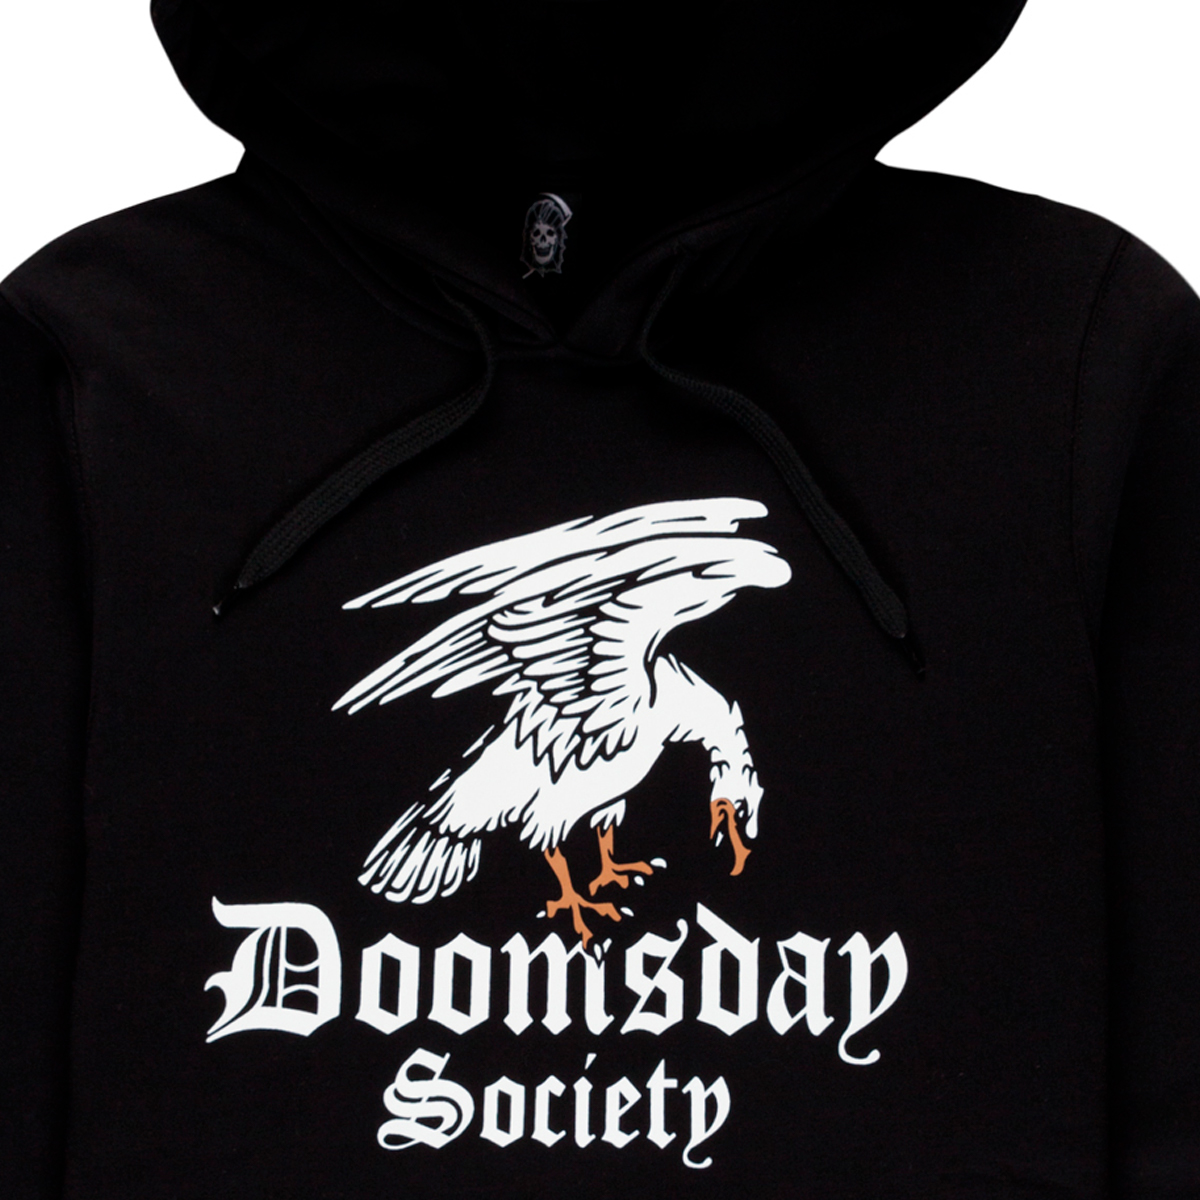 doomsday doomsday society brand streetwear Clothing hoody t-shirt merch design apparel